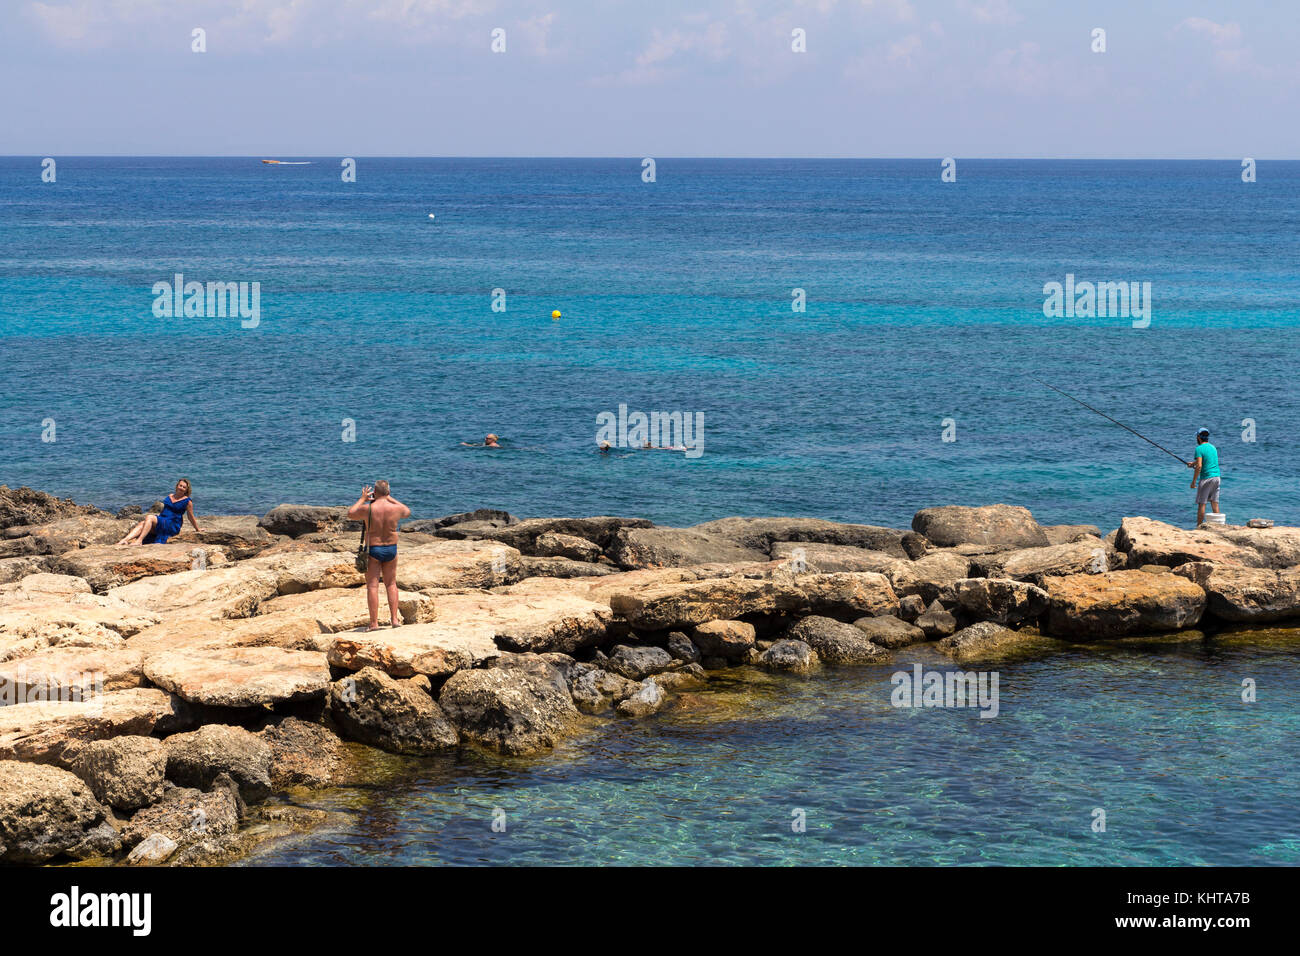 Protaras, Cyprus. 14th June 2017. Credit: Tove Larsen/Alamy Stock Photo